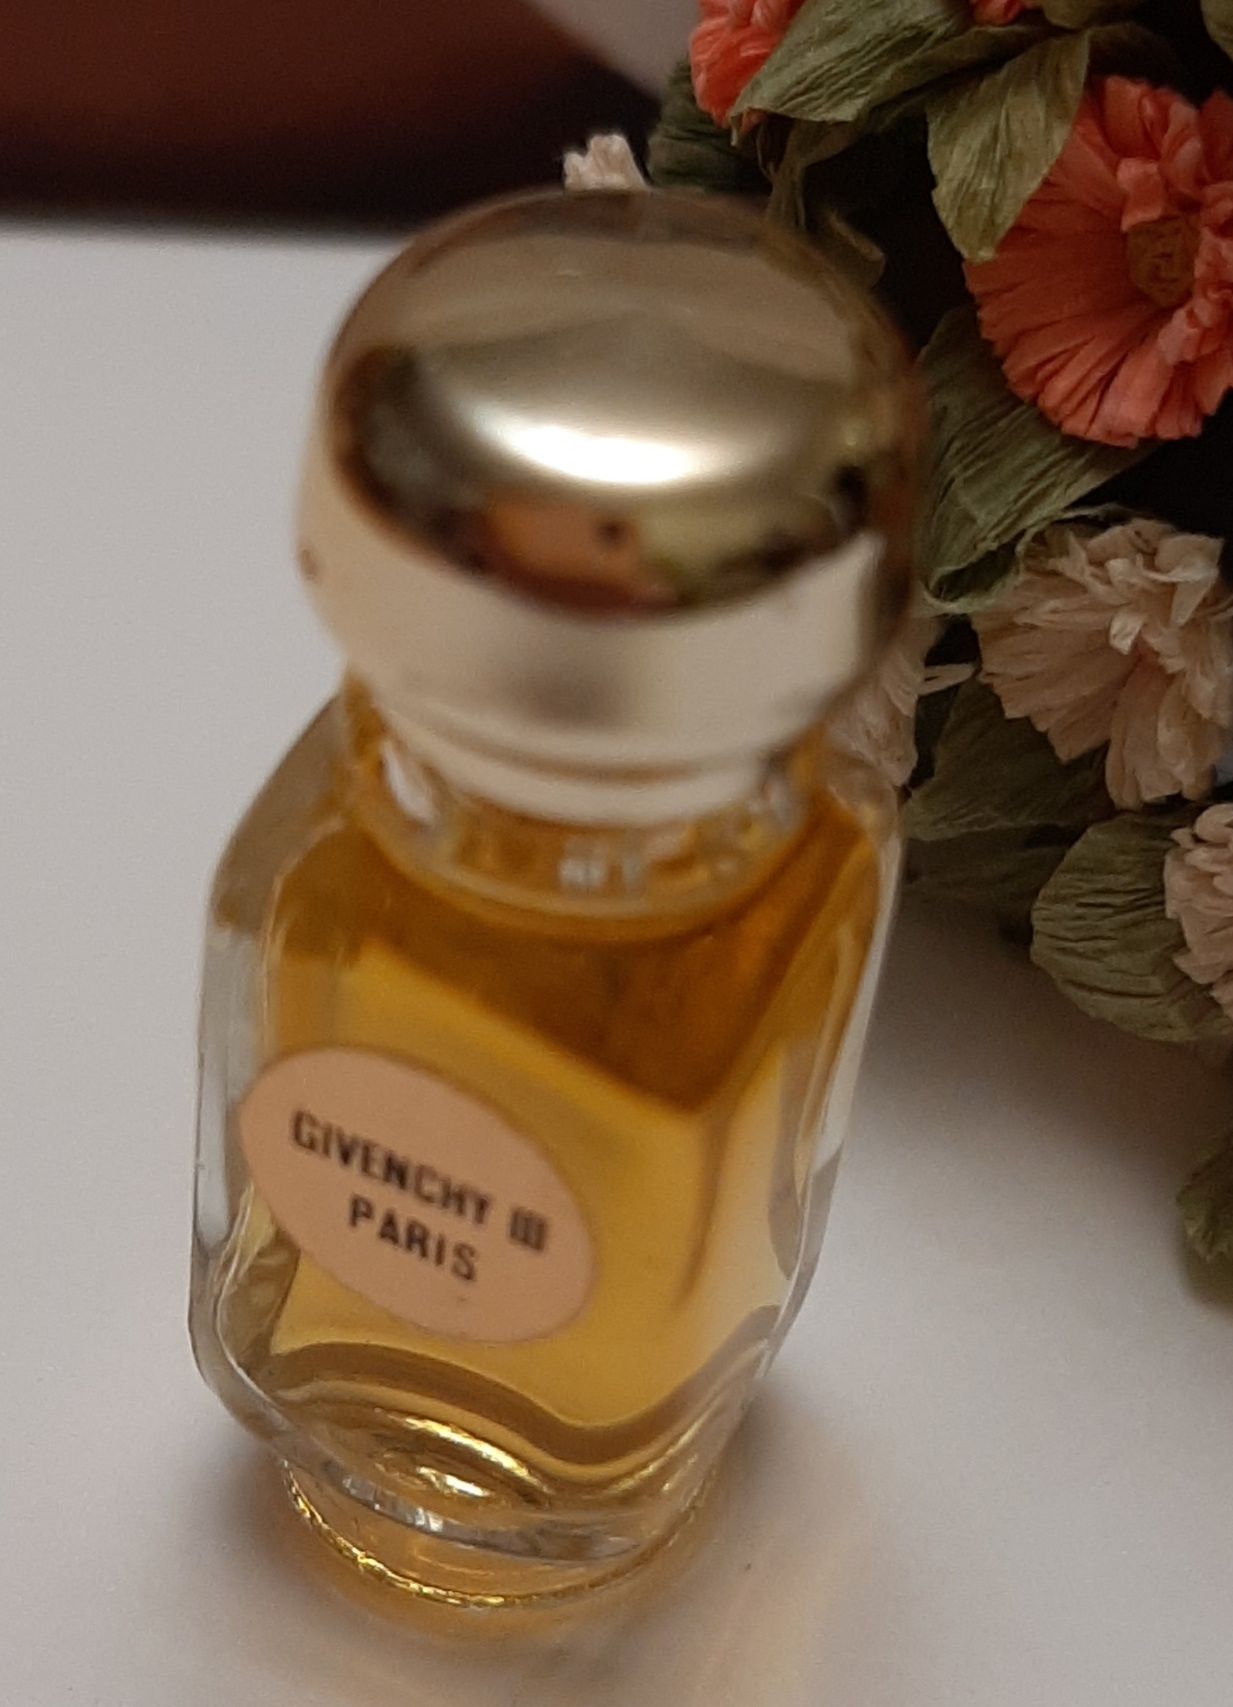 Givenchy III edt 2 ml, miniatura vintage